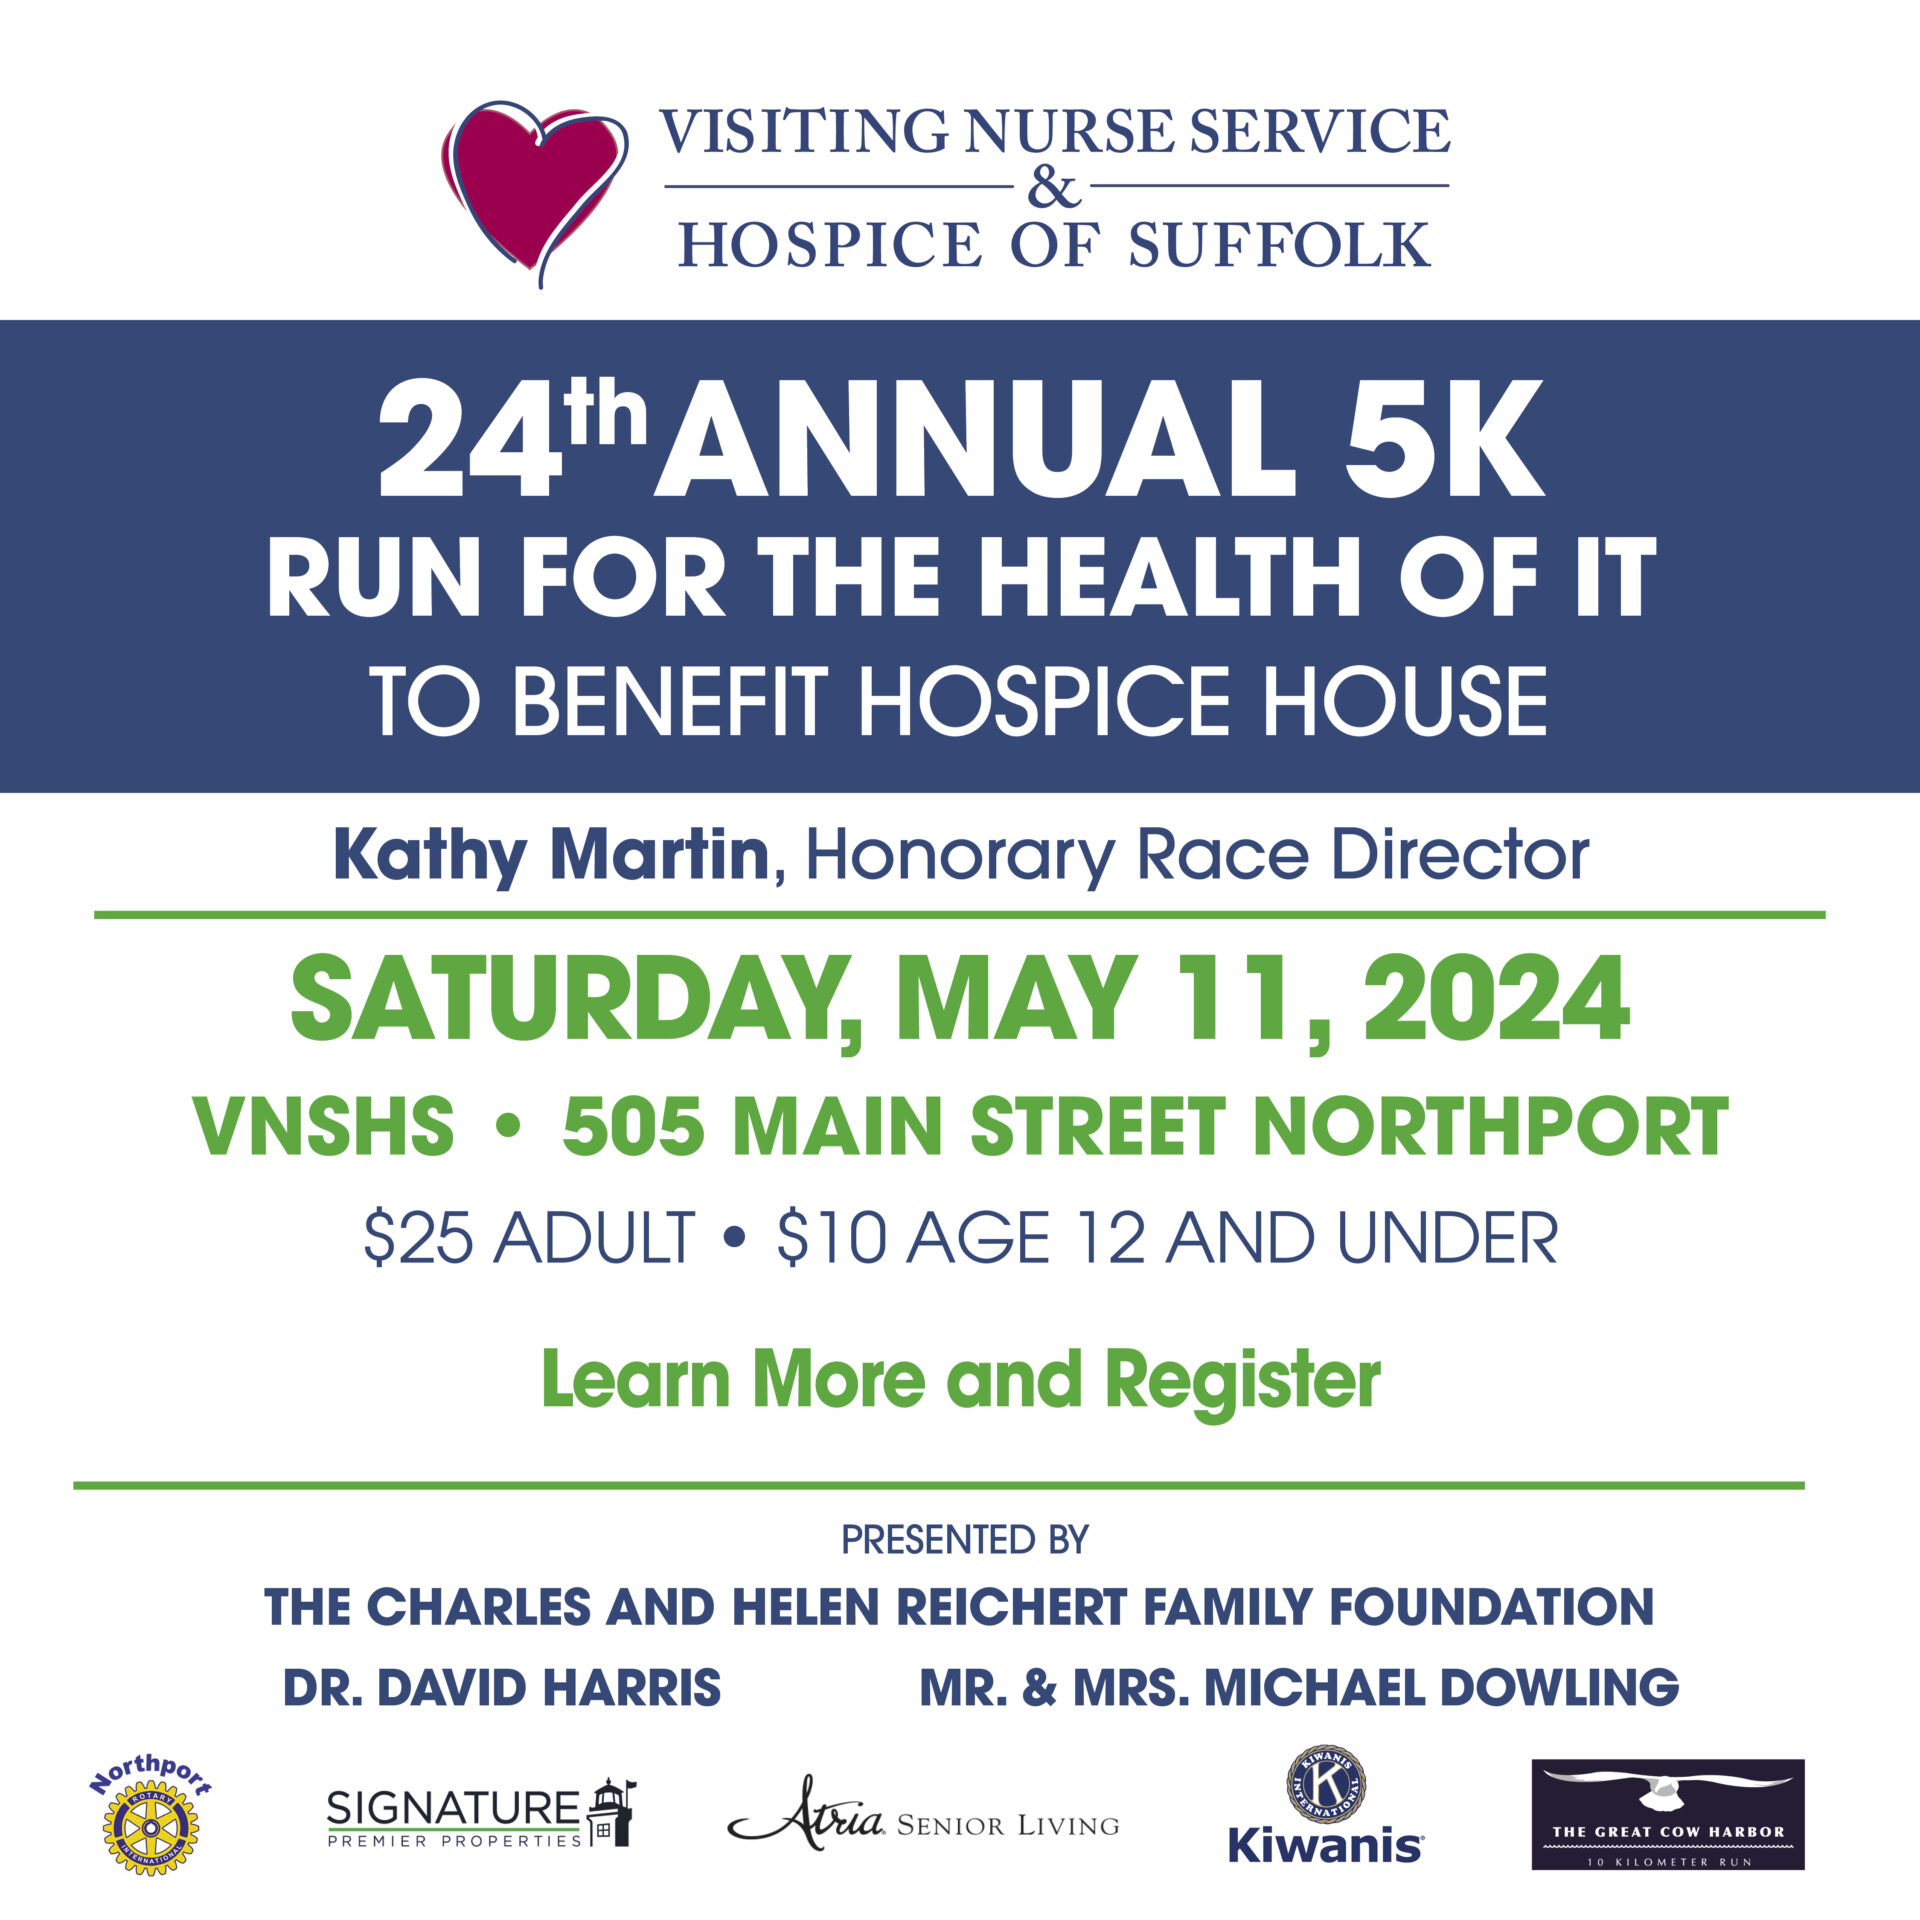 2024 VNSHS Run for the Health of It 5K Run/Walk